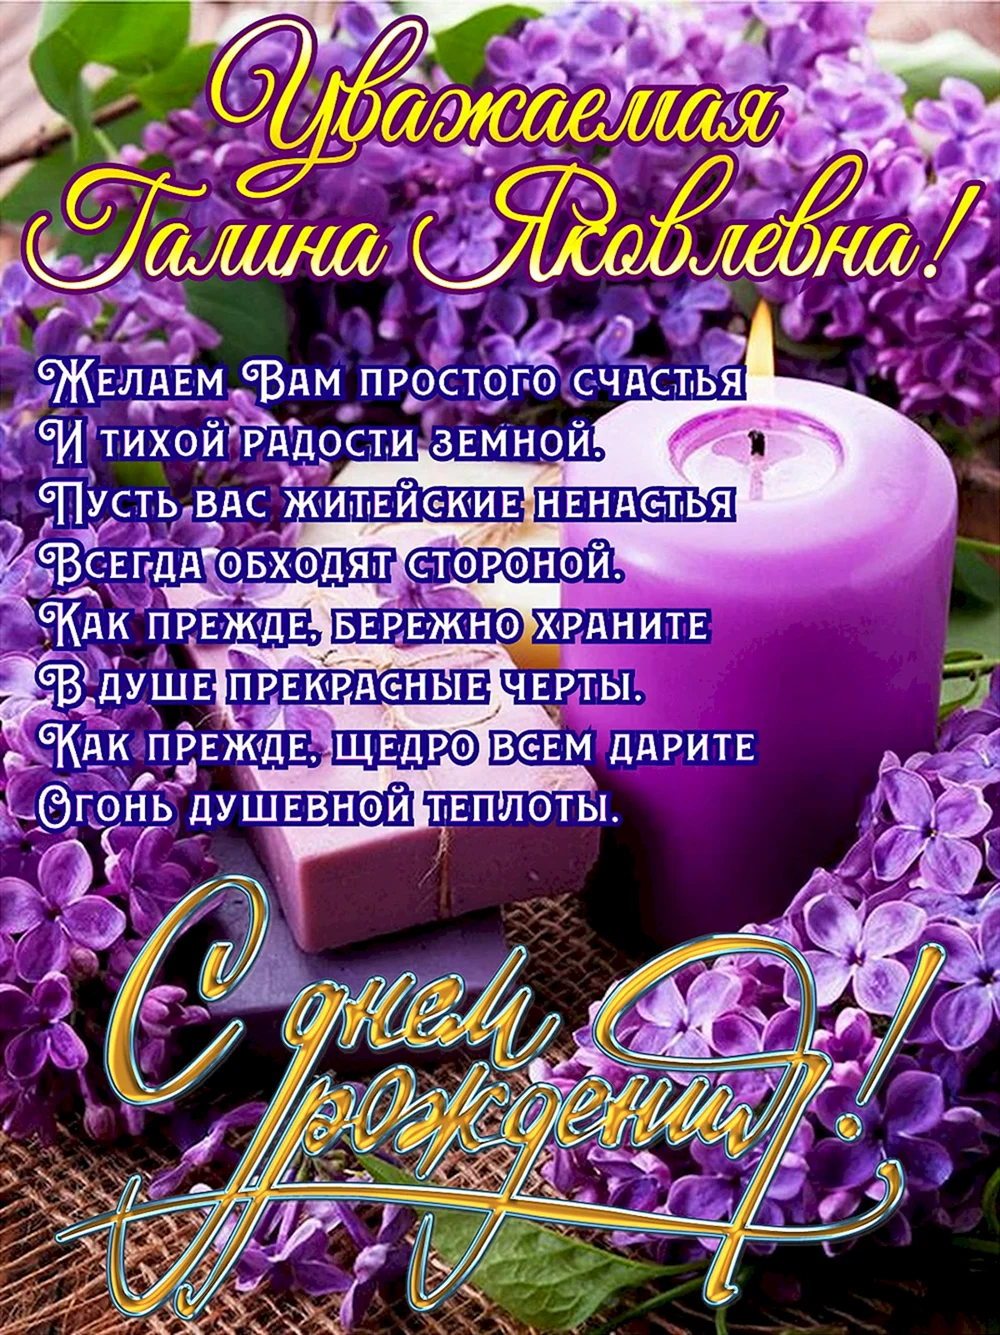 Галина Яковлевна с днем рождения